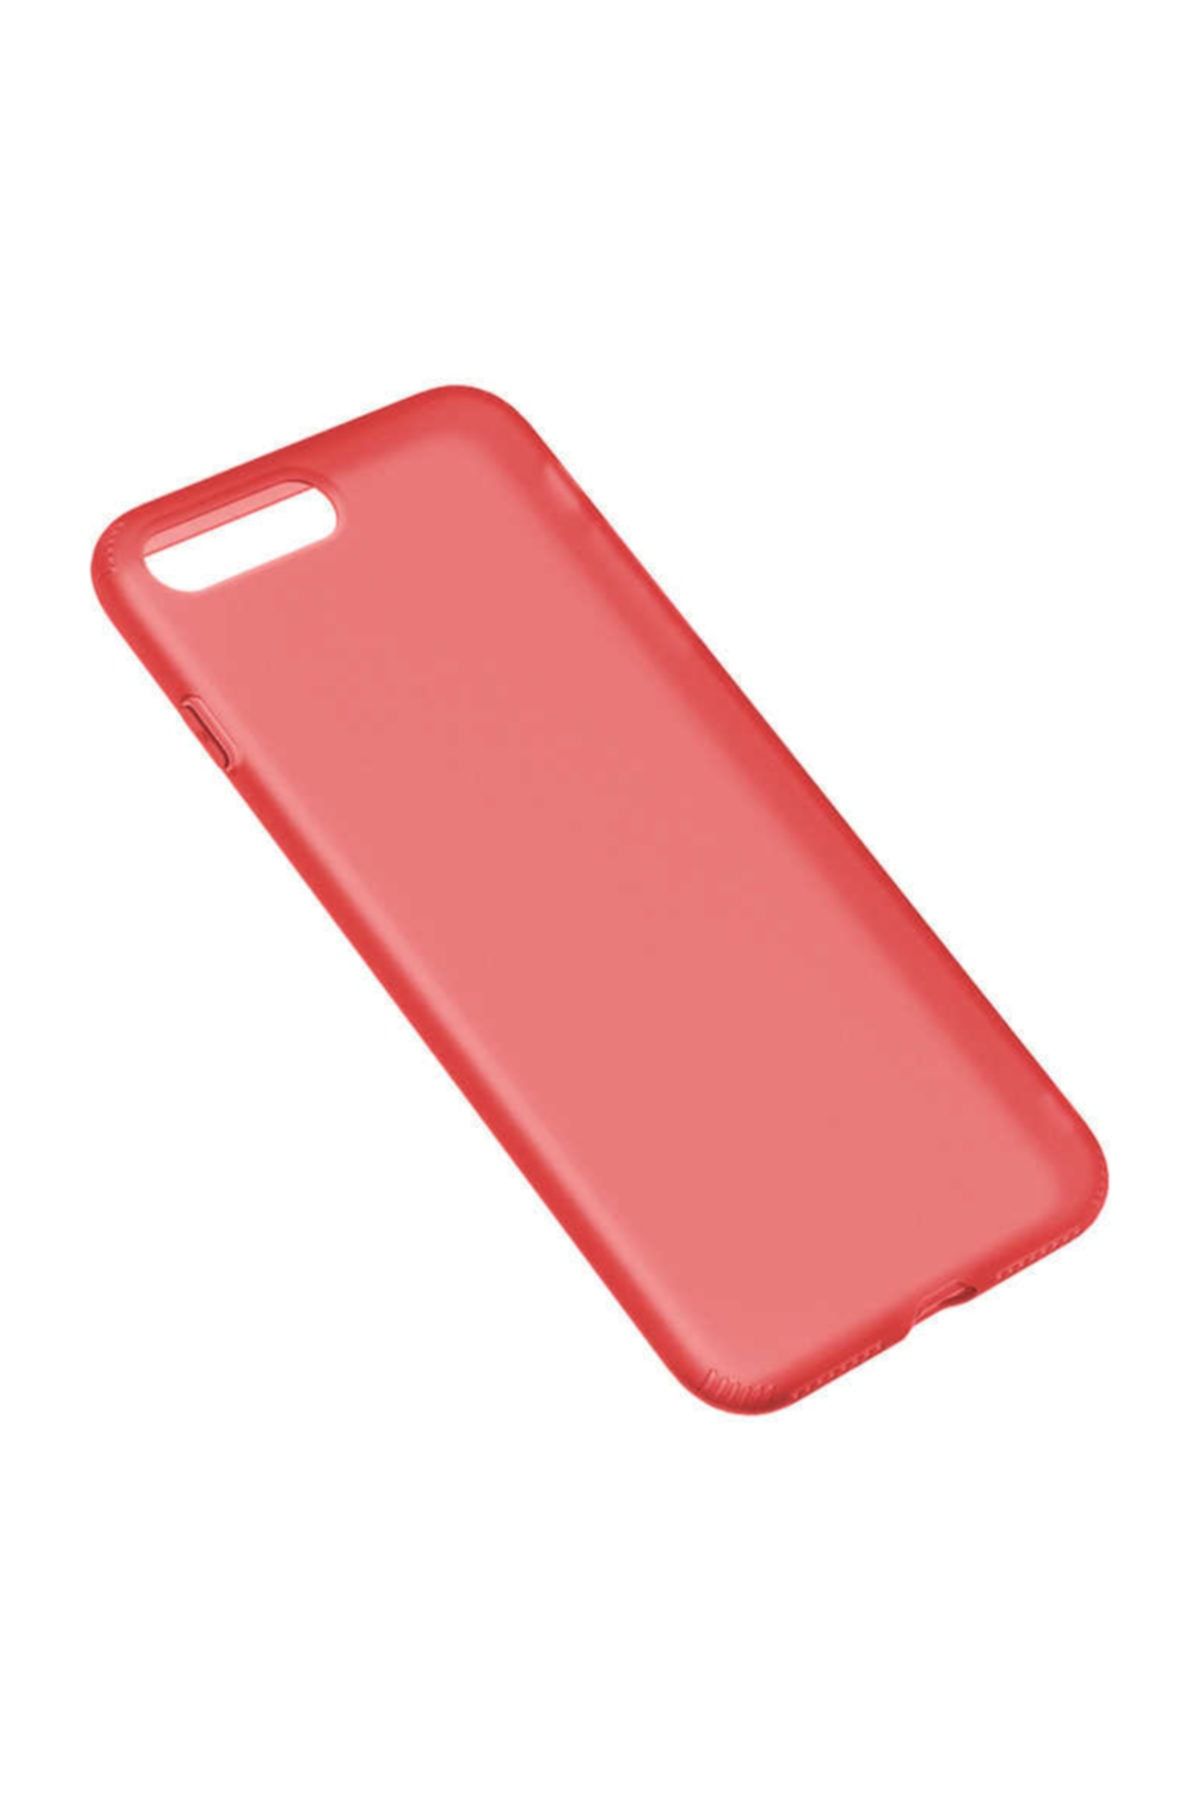 Anka Cep Cep Telefonu Aksesuarları Apple Iphone 7 - 8 Plus Kılıf Odos Silikon Mat Renkli Kapak